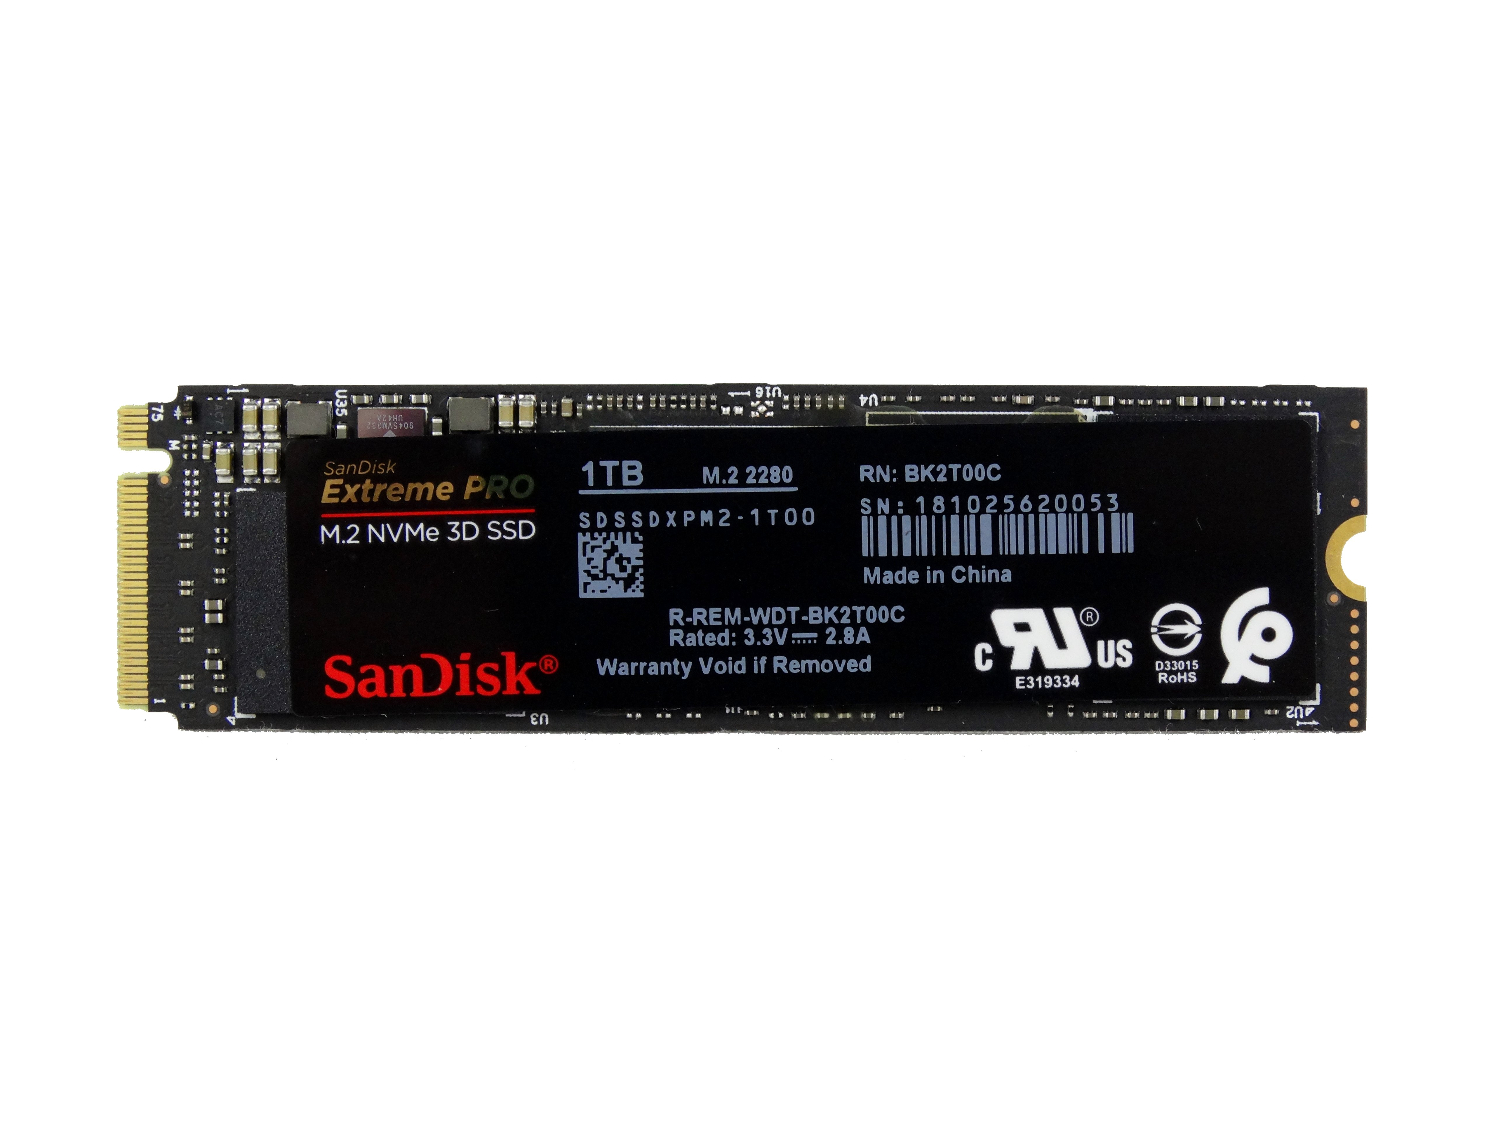 SanDisk Extreme Pro M.2 NVMe 3D SSD Review - Tom's Hardware